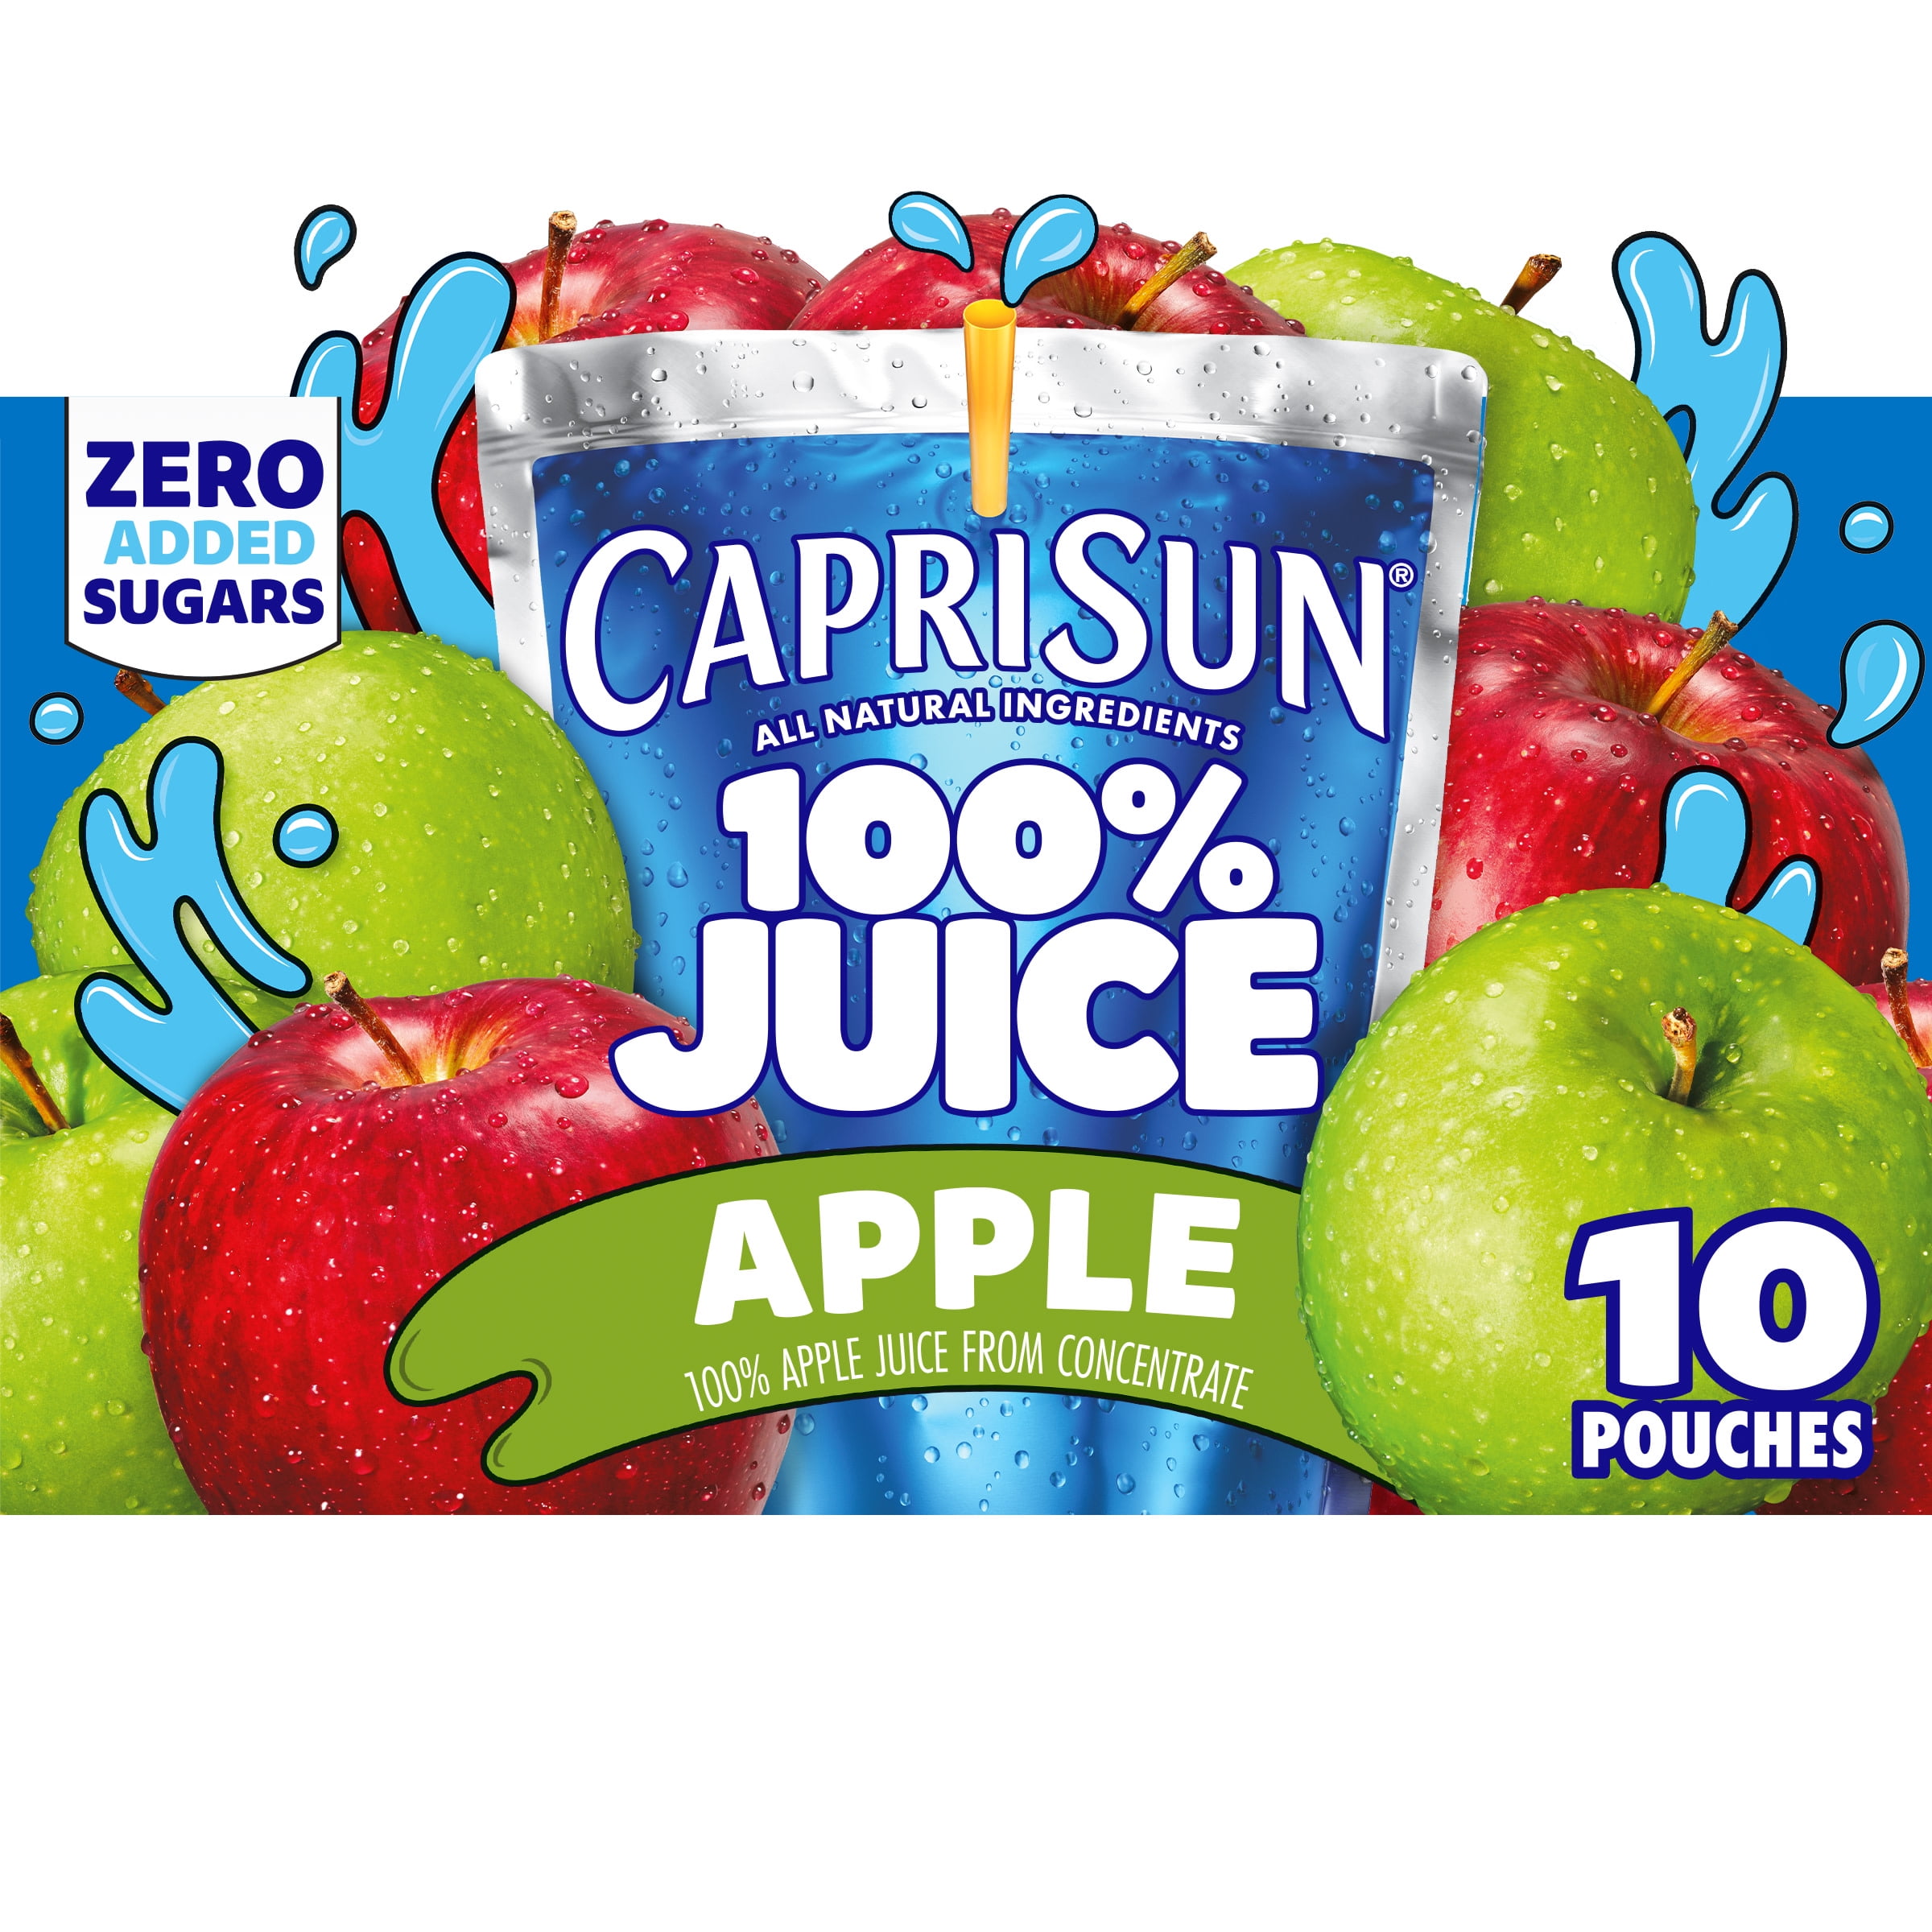 100% Apple Juice 128oz - Still Juices - S. Martinelli & Co